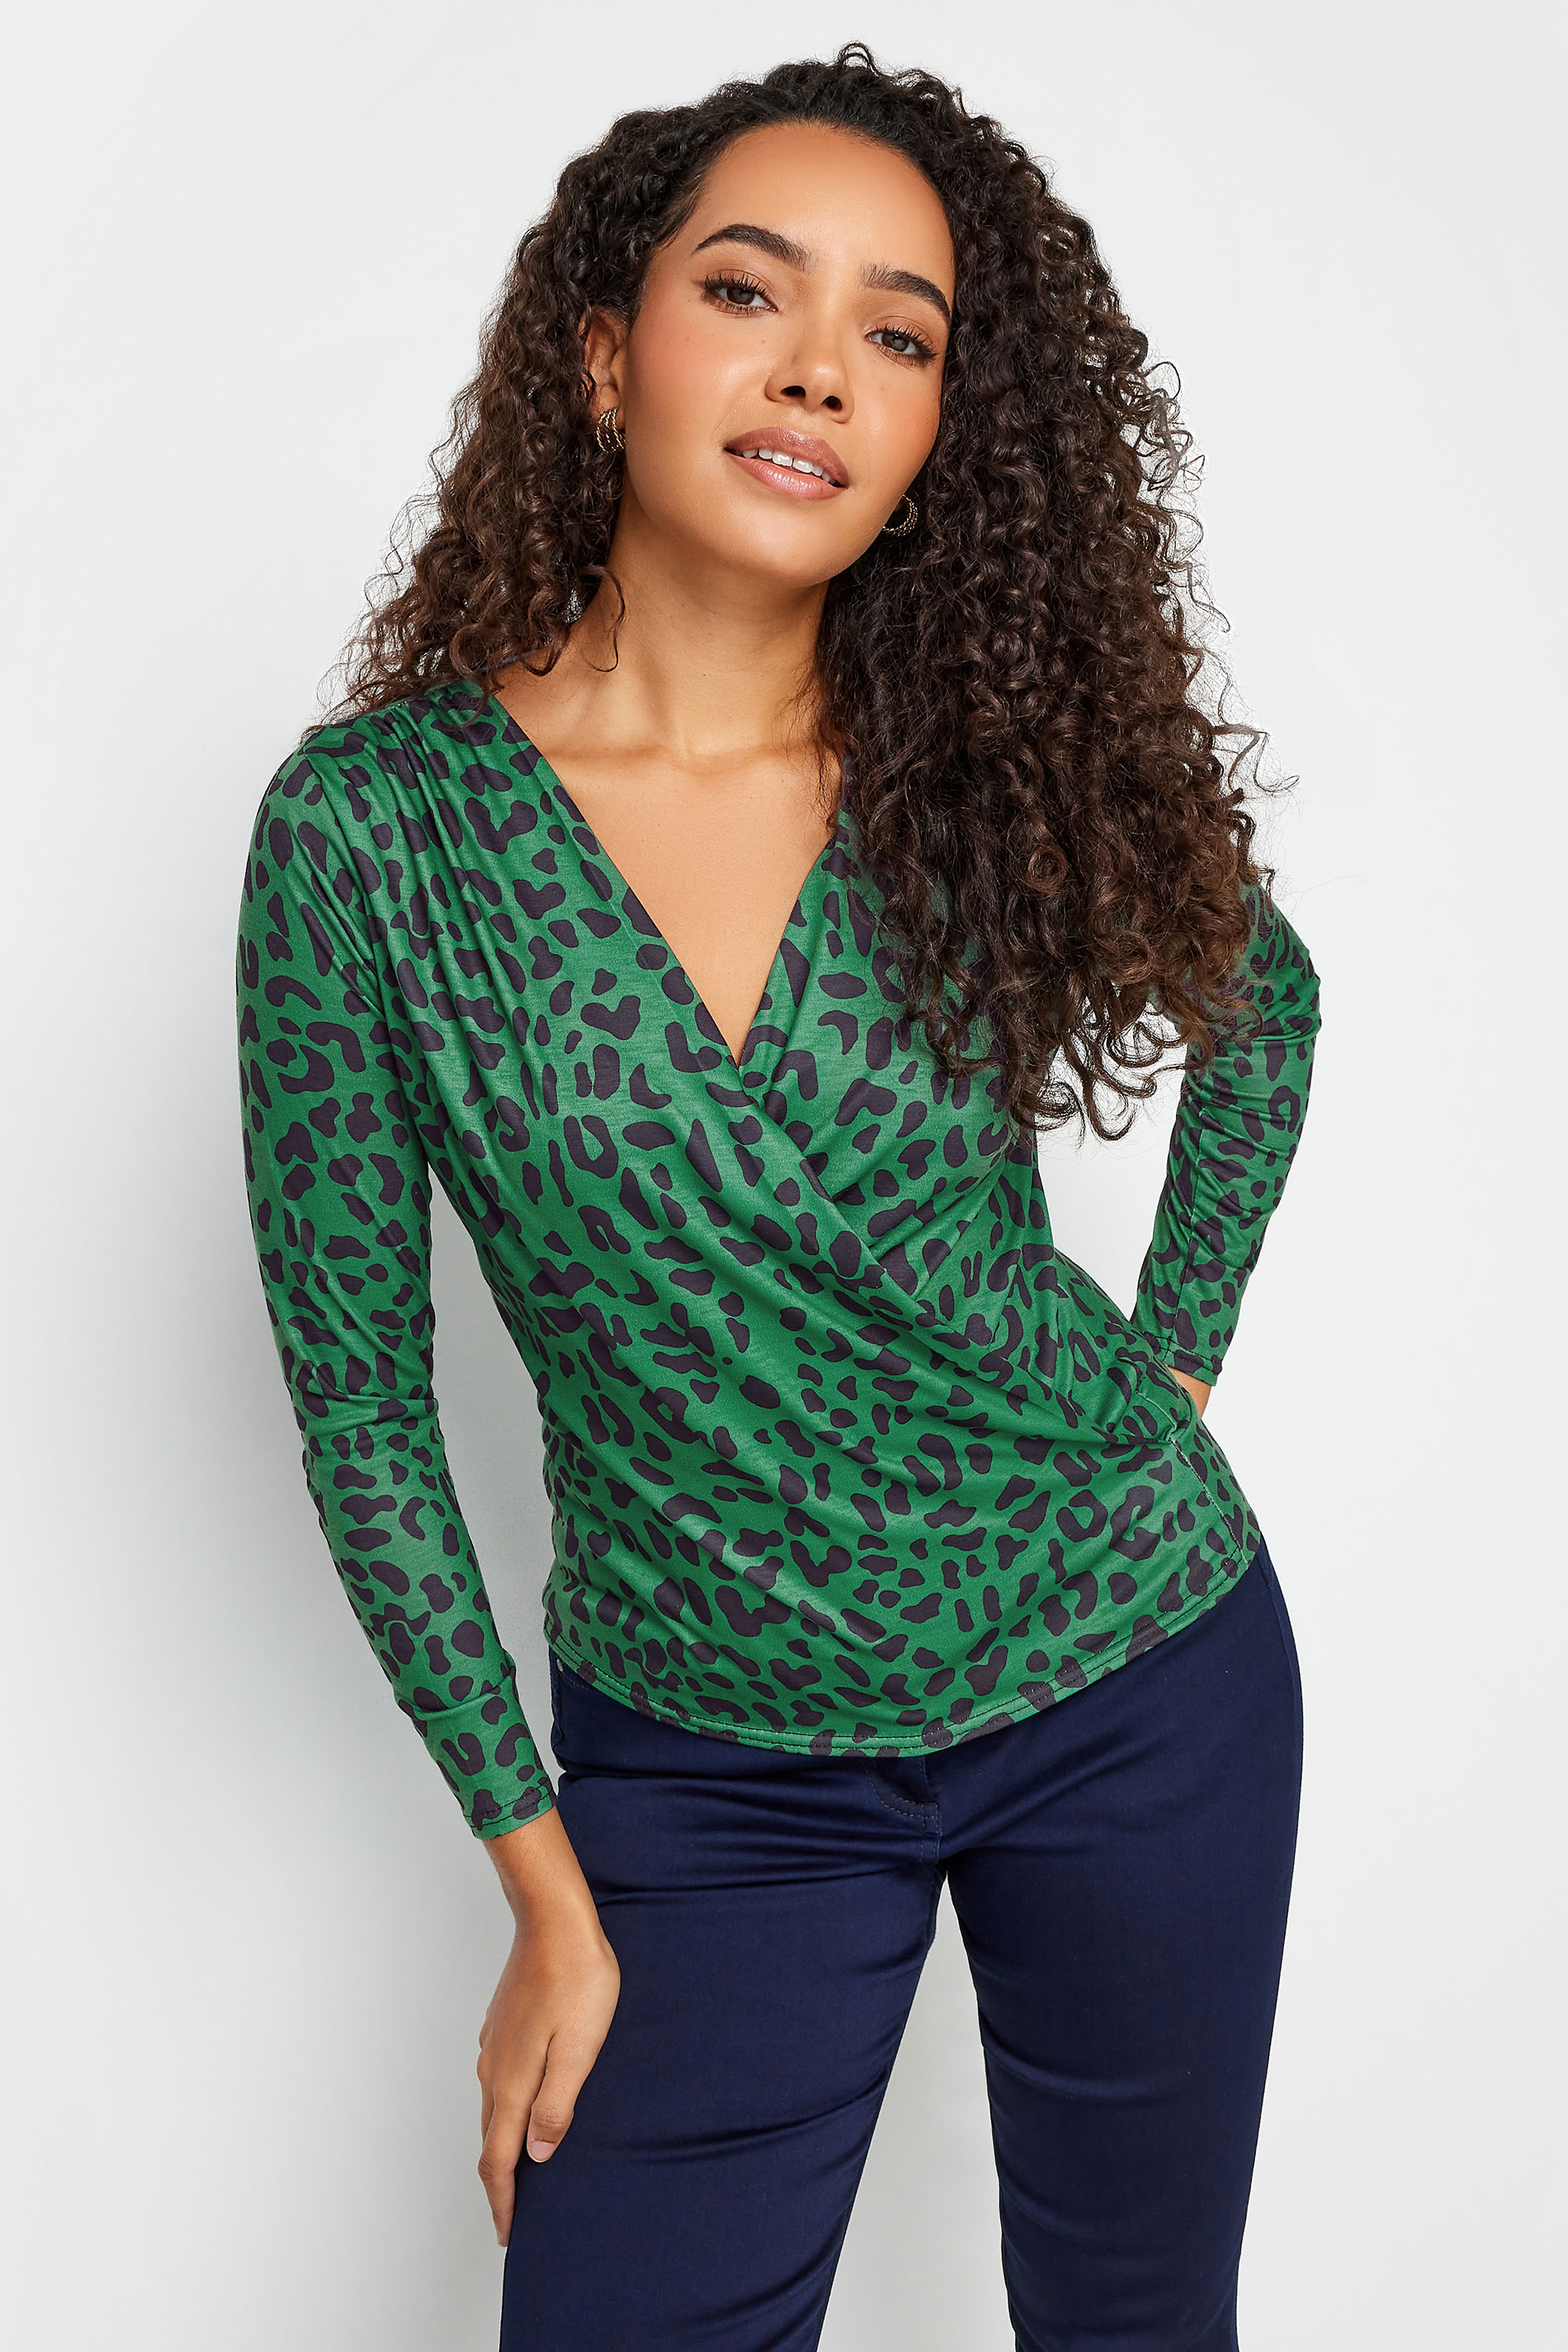 M&Co Green Leopard Print Wrap Top | M&Co 1